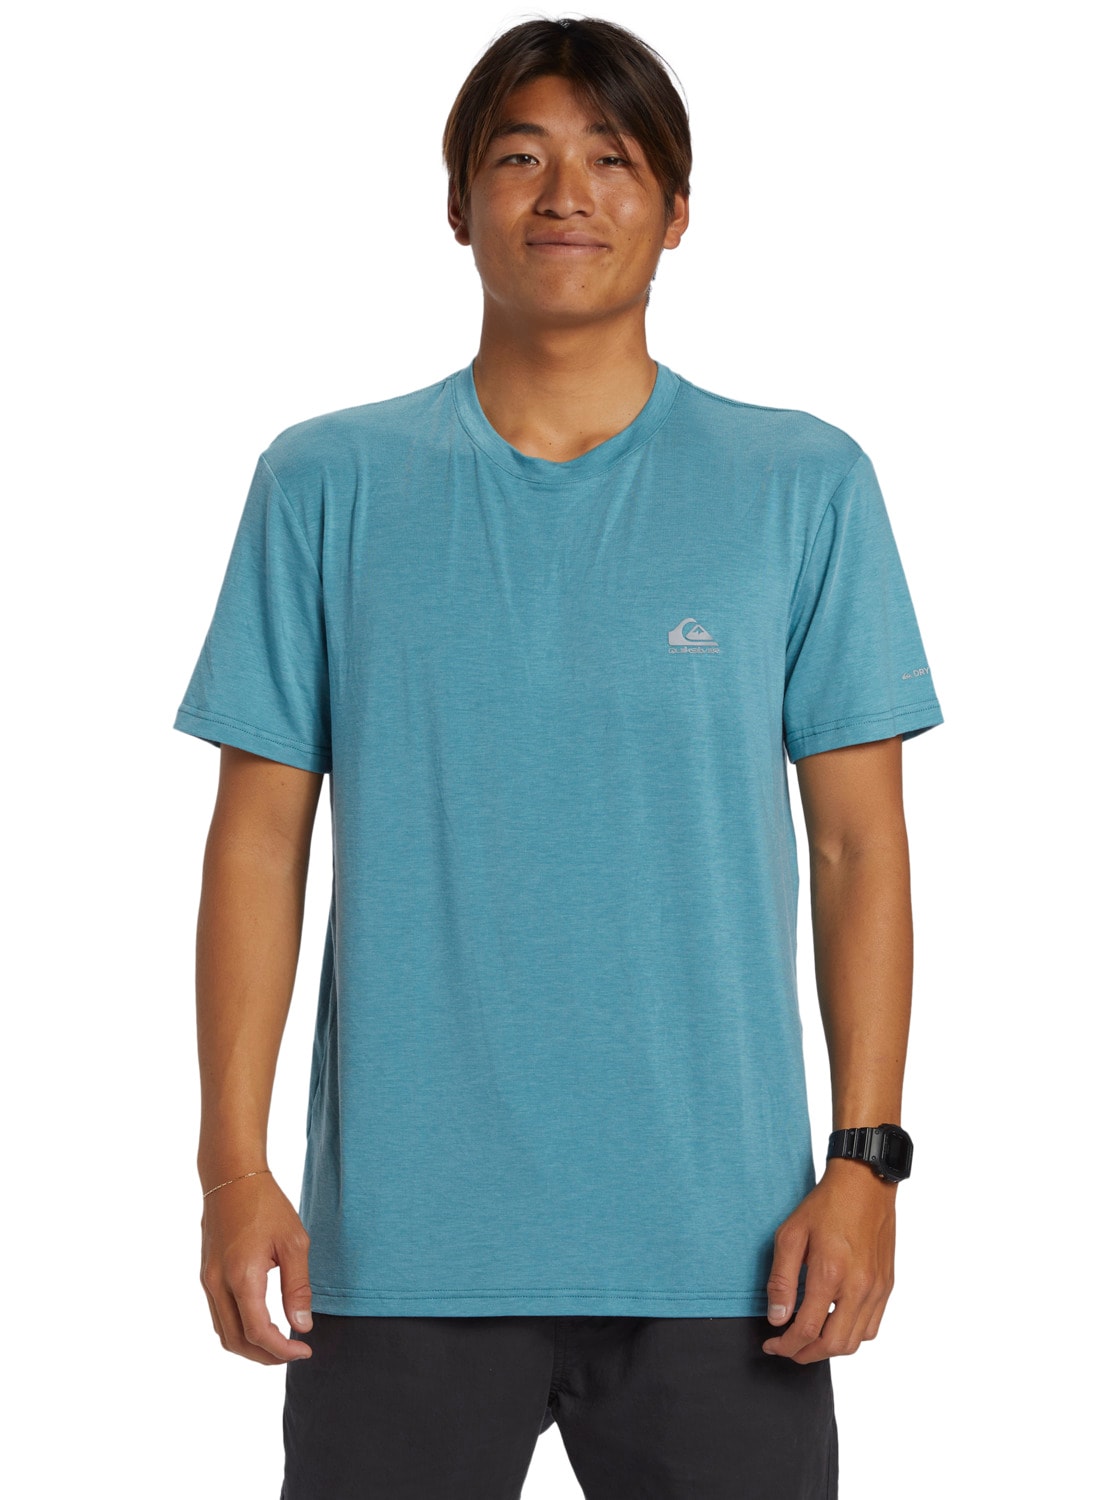 Run« Quiksilver »Coastal shoppen T-Shirt bei OTTO online